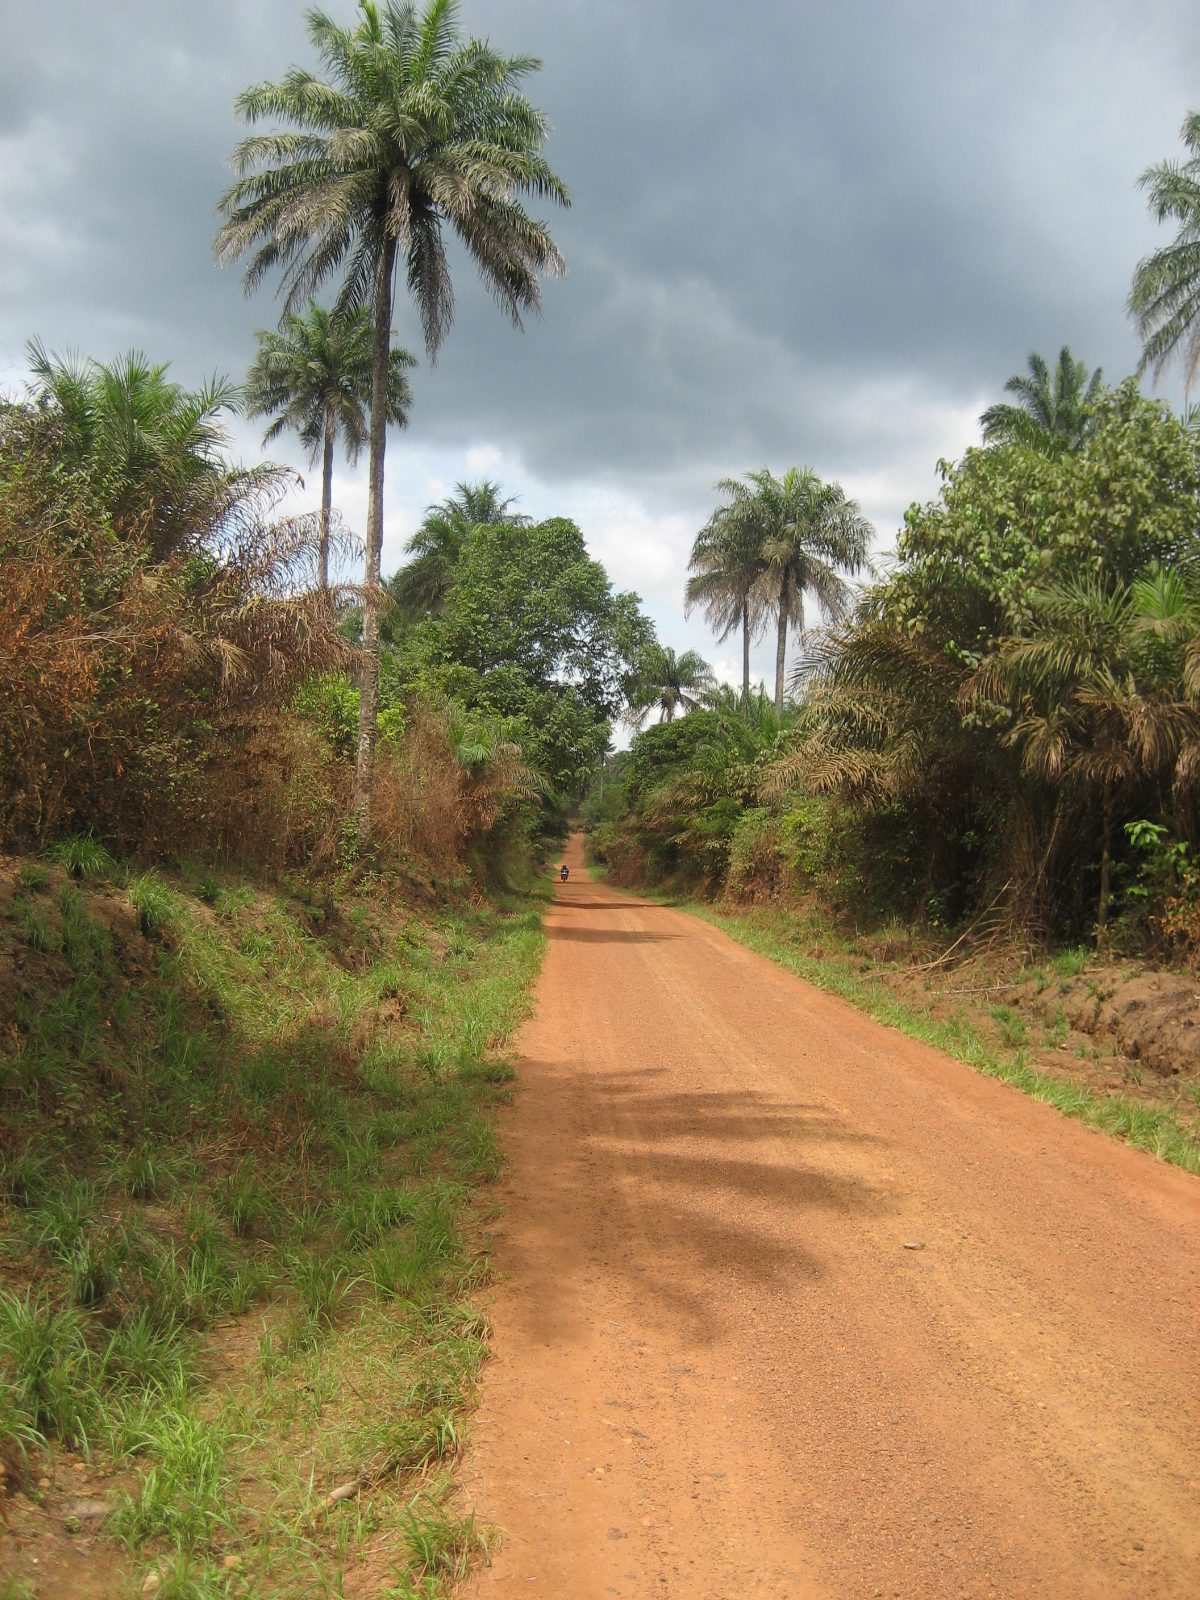 The road to Gendema, Sierra Leone